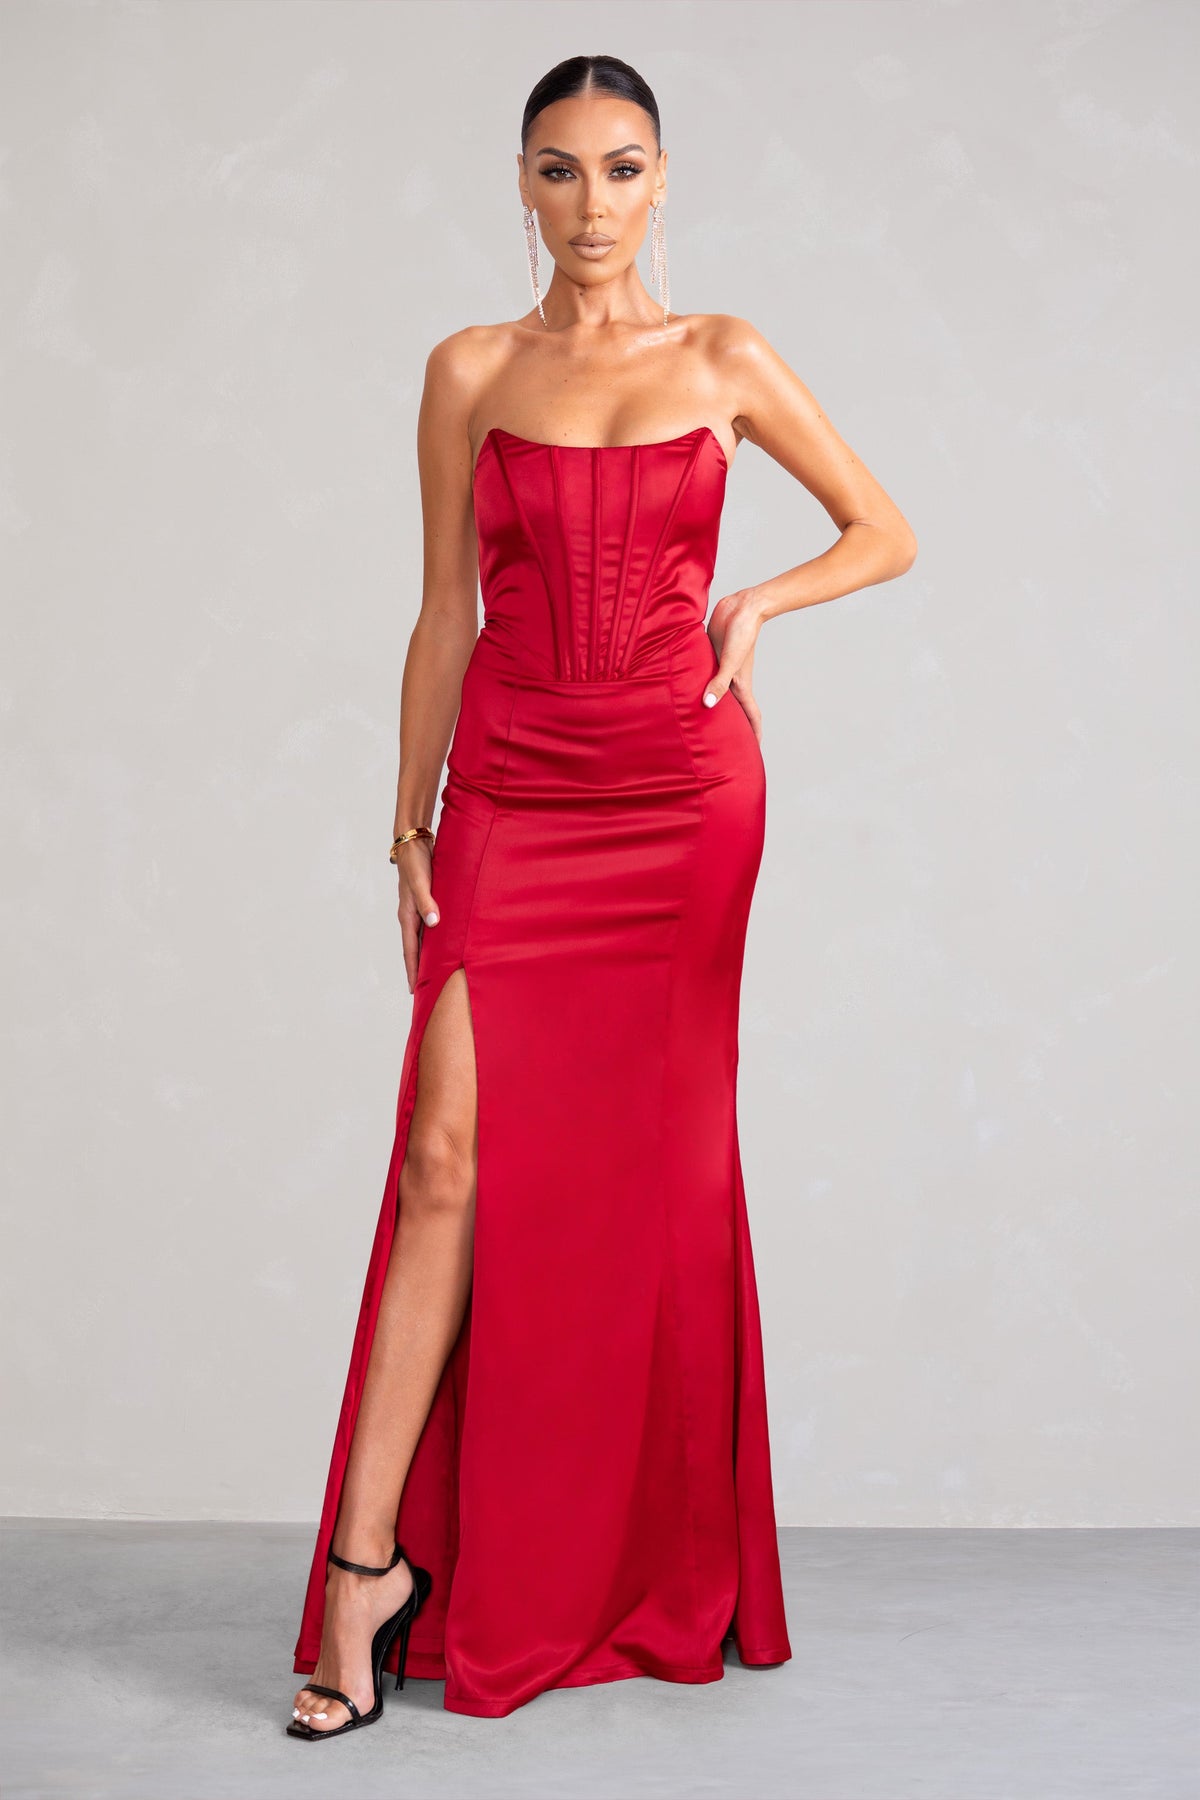 Red Corset Dress -  Canada